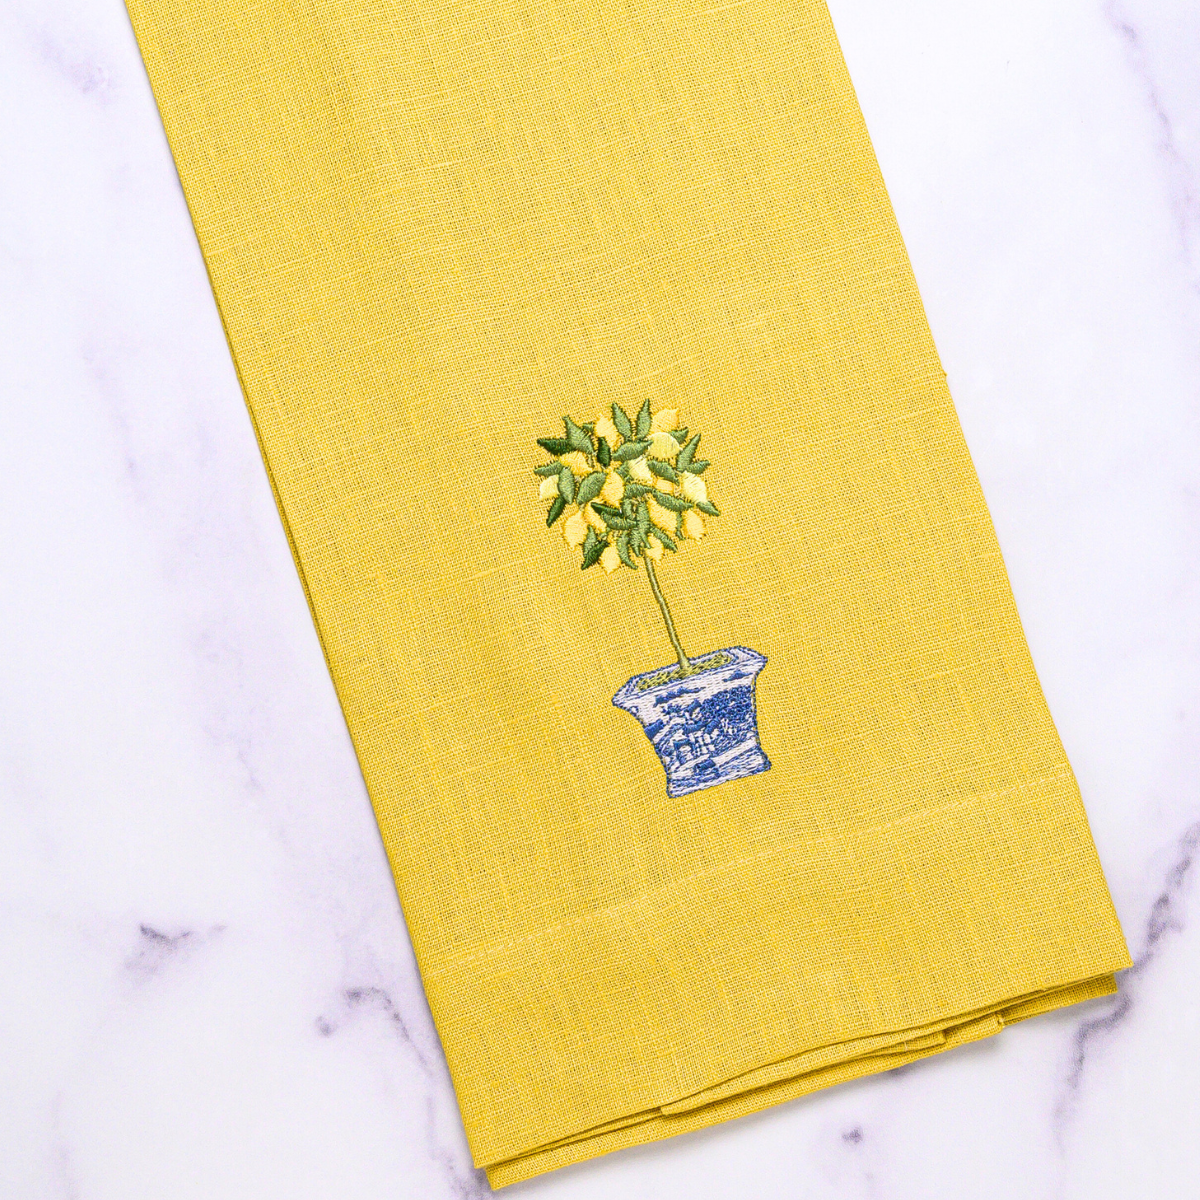 Lemon Topiary Linen Towel - New